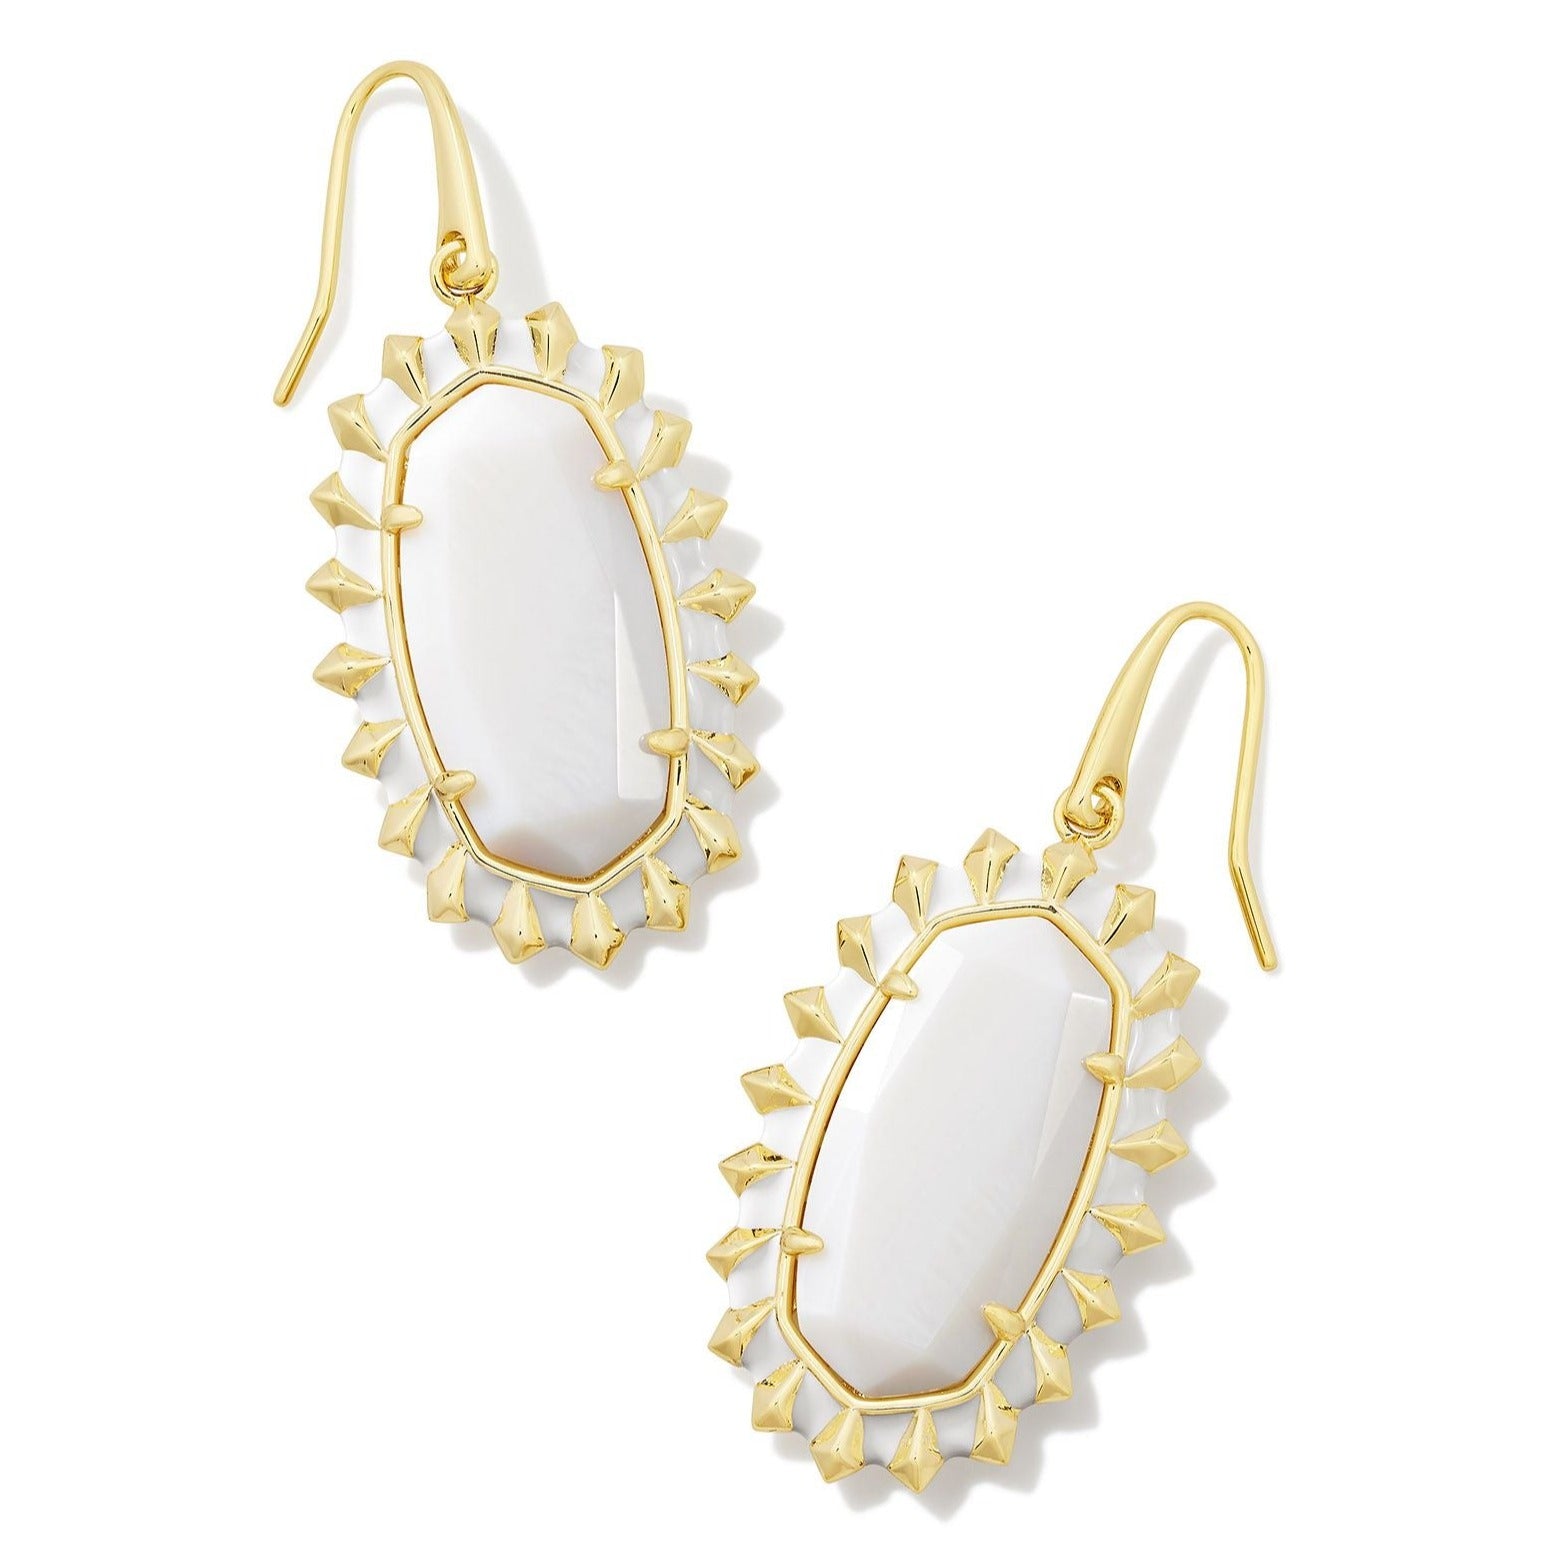 Kendra Scott | Dani Gold Color Burst Frame Drop Earrings in White Mother-of-Pearl